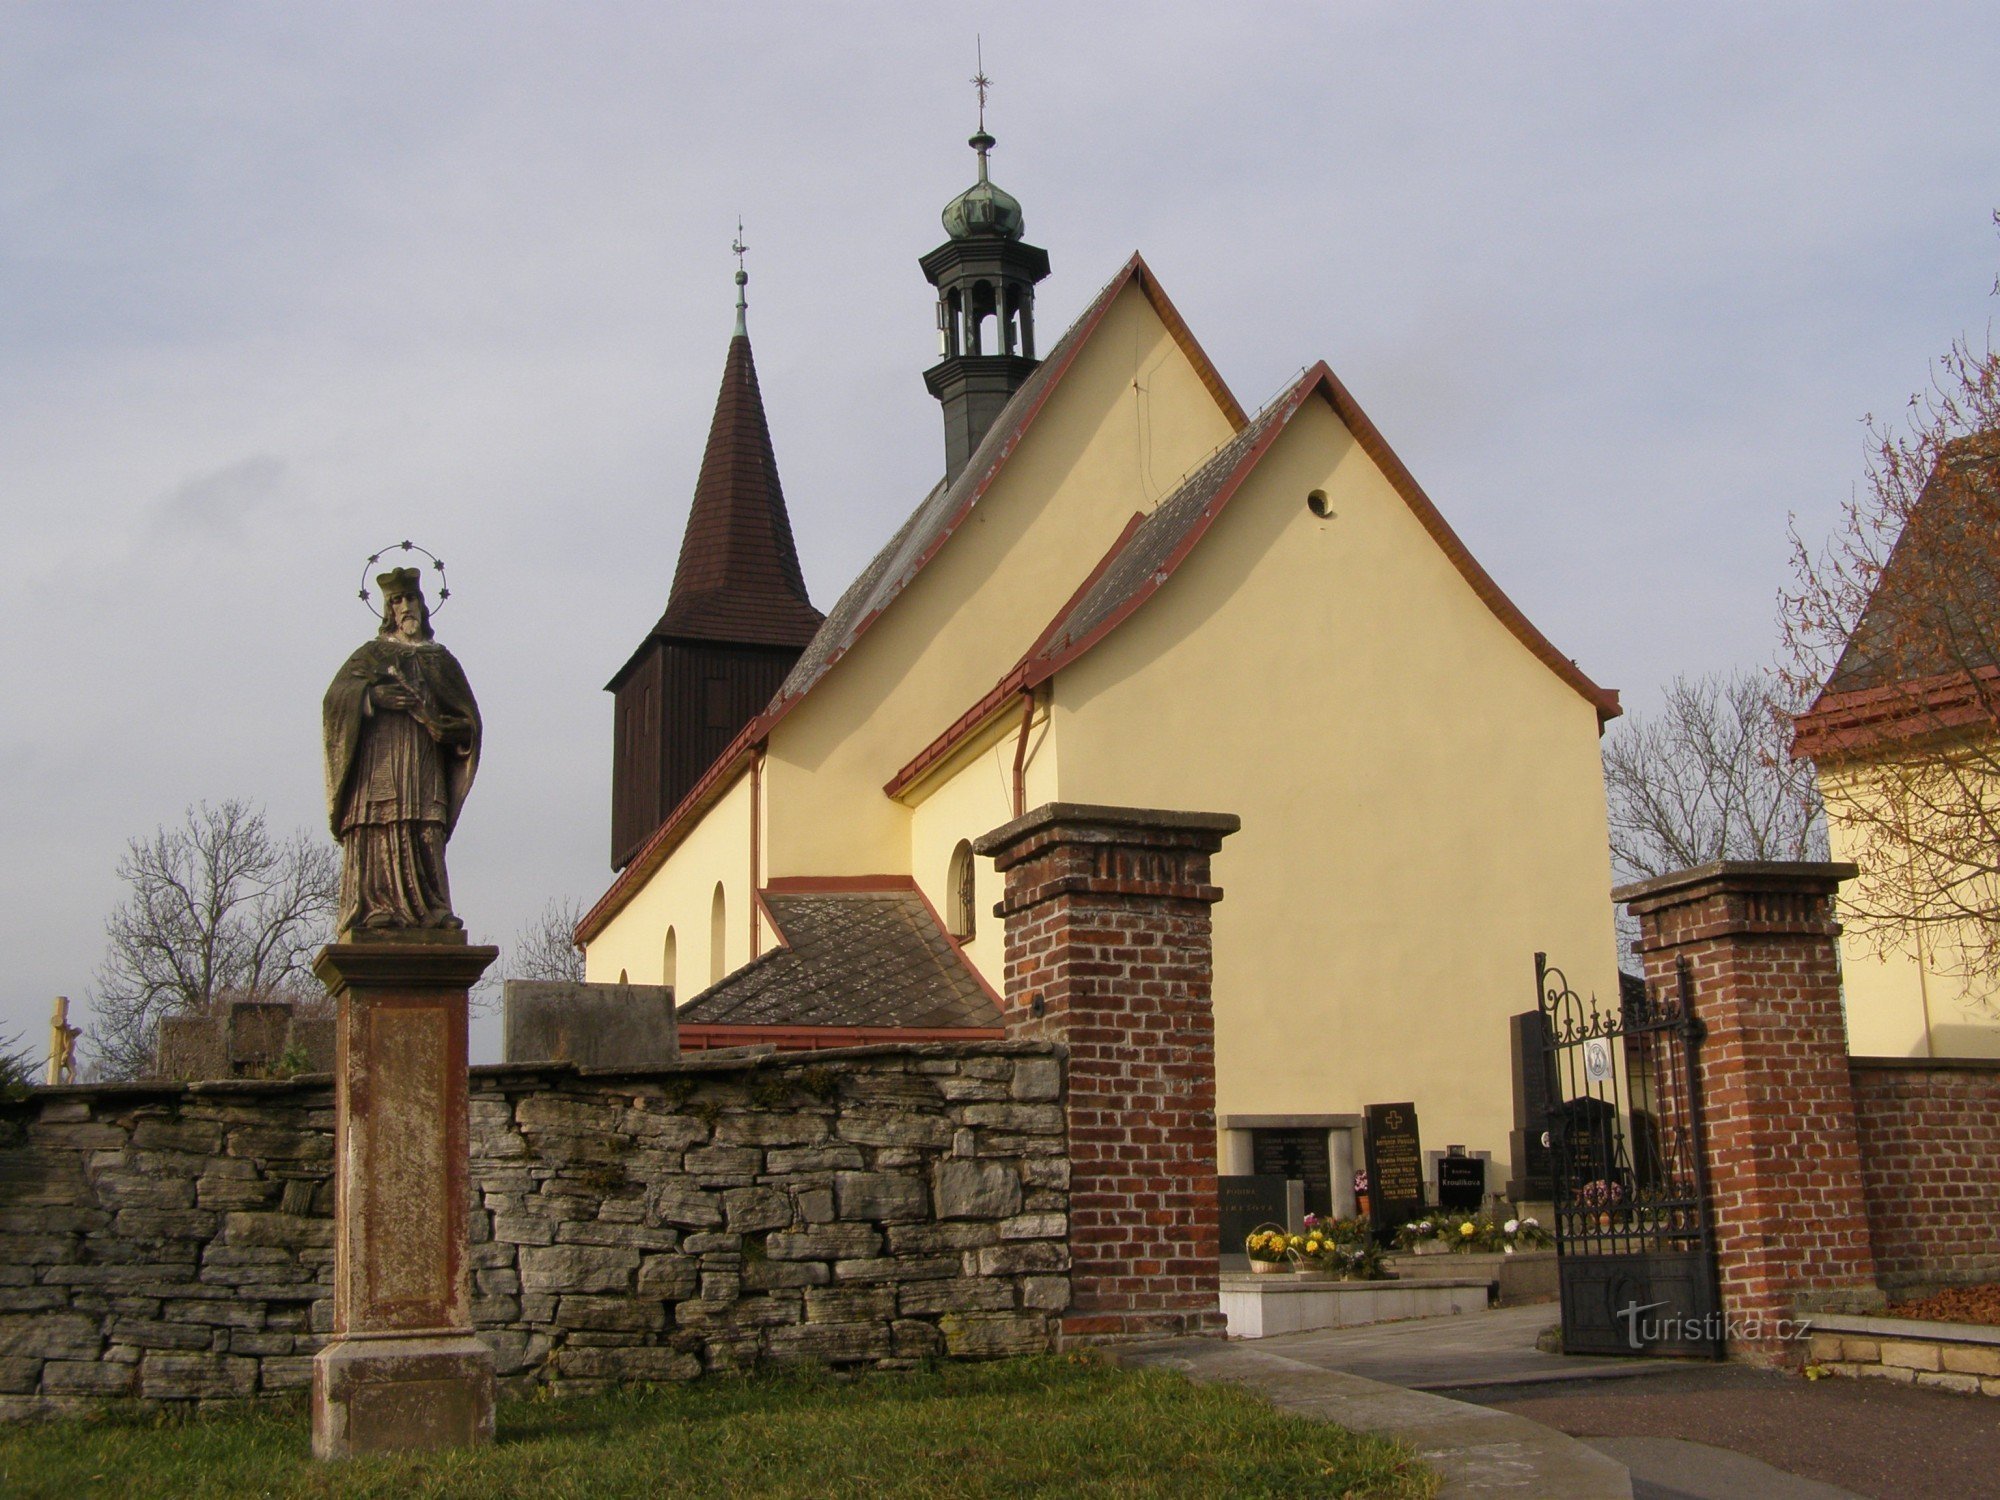 Rtyne i Podkrkonoší - kirken St. Johannes Døberen med klokketårnet